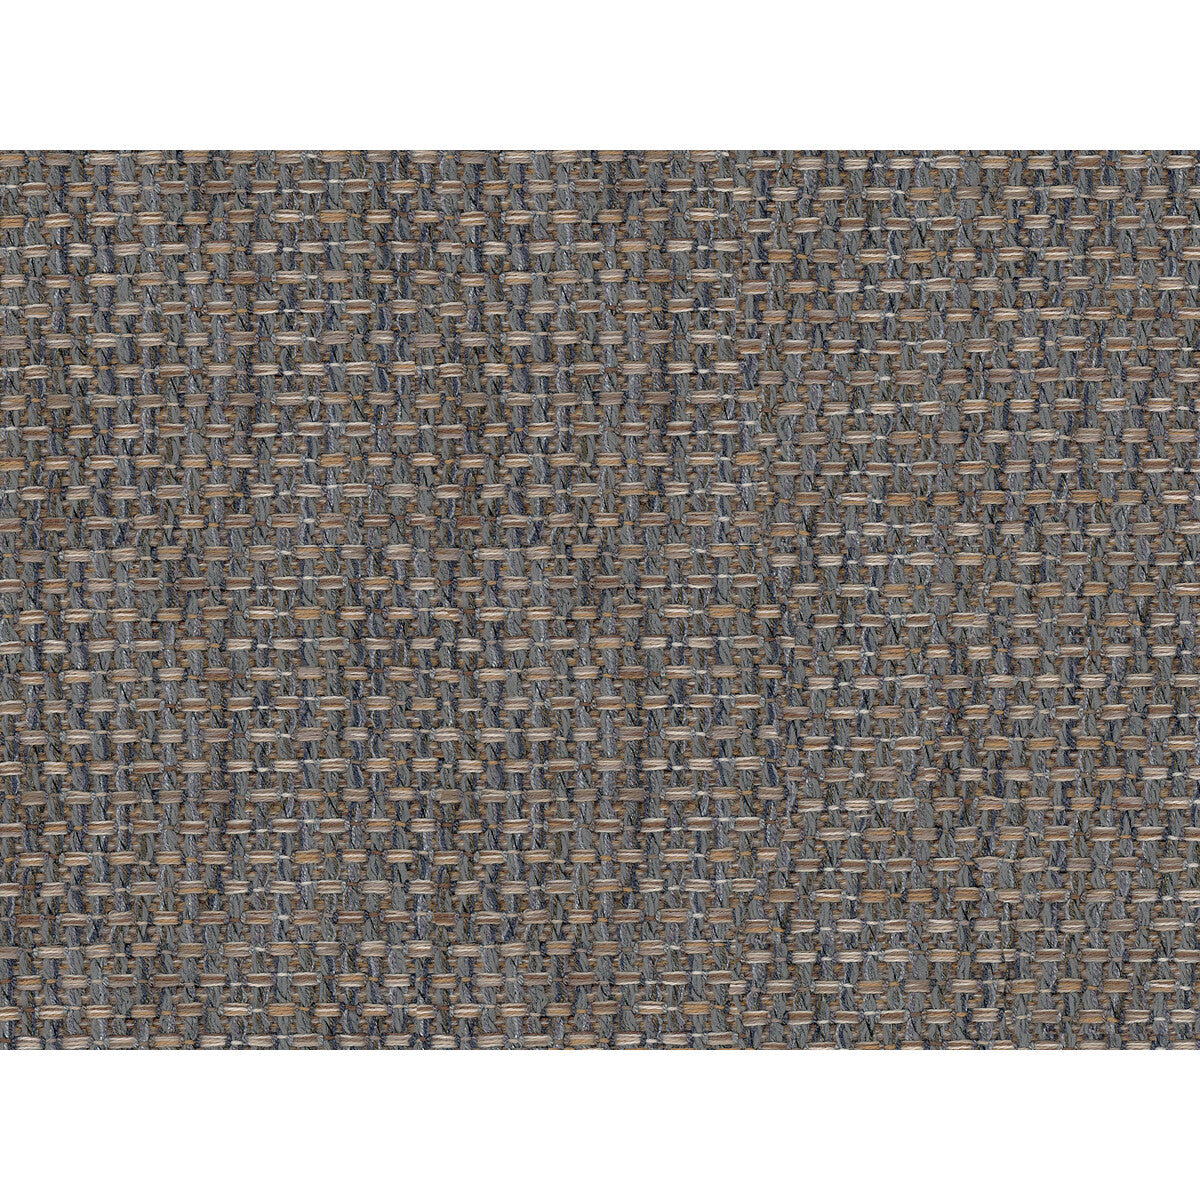 Kravet Smart fabric in 34322-1516 color - pattern 34322.1516.0 - by Kravet Smart